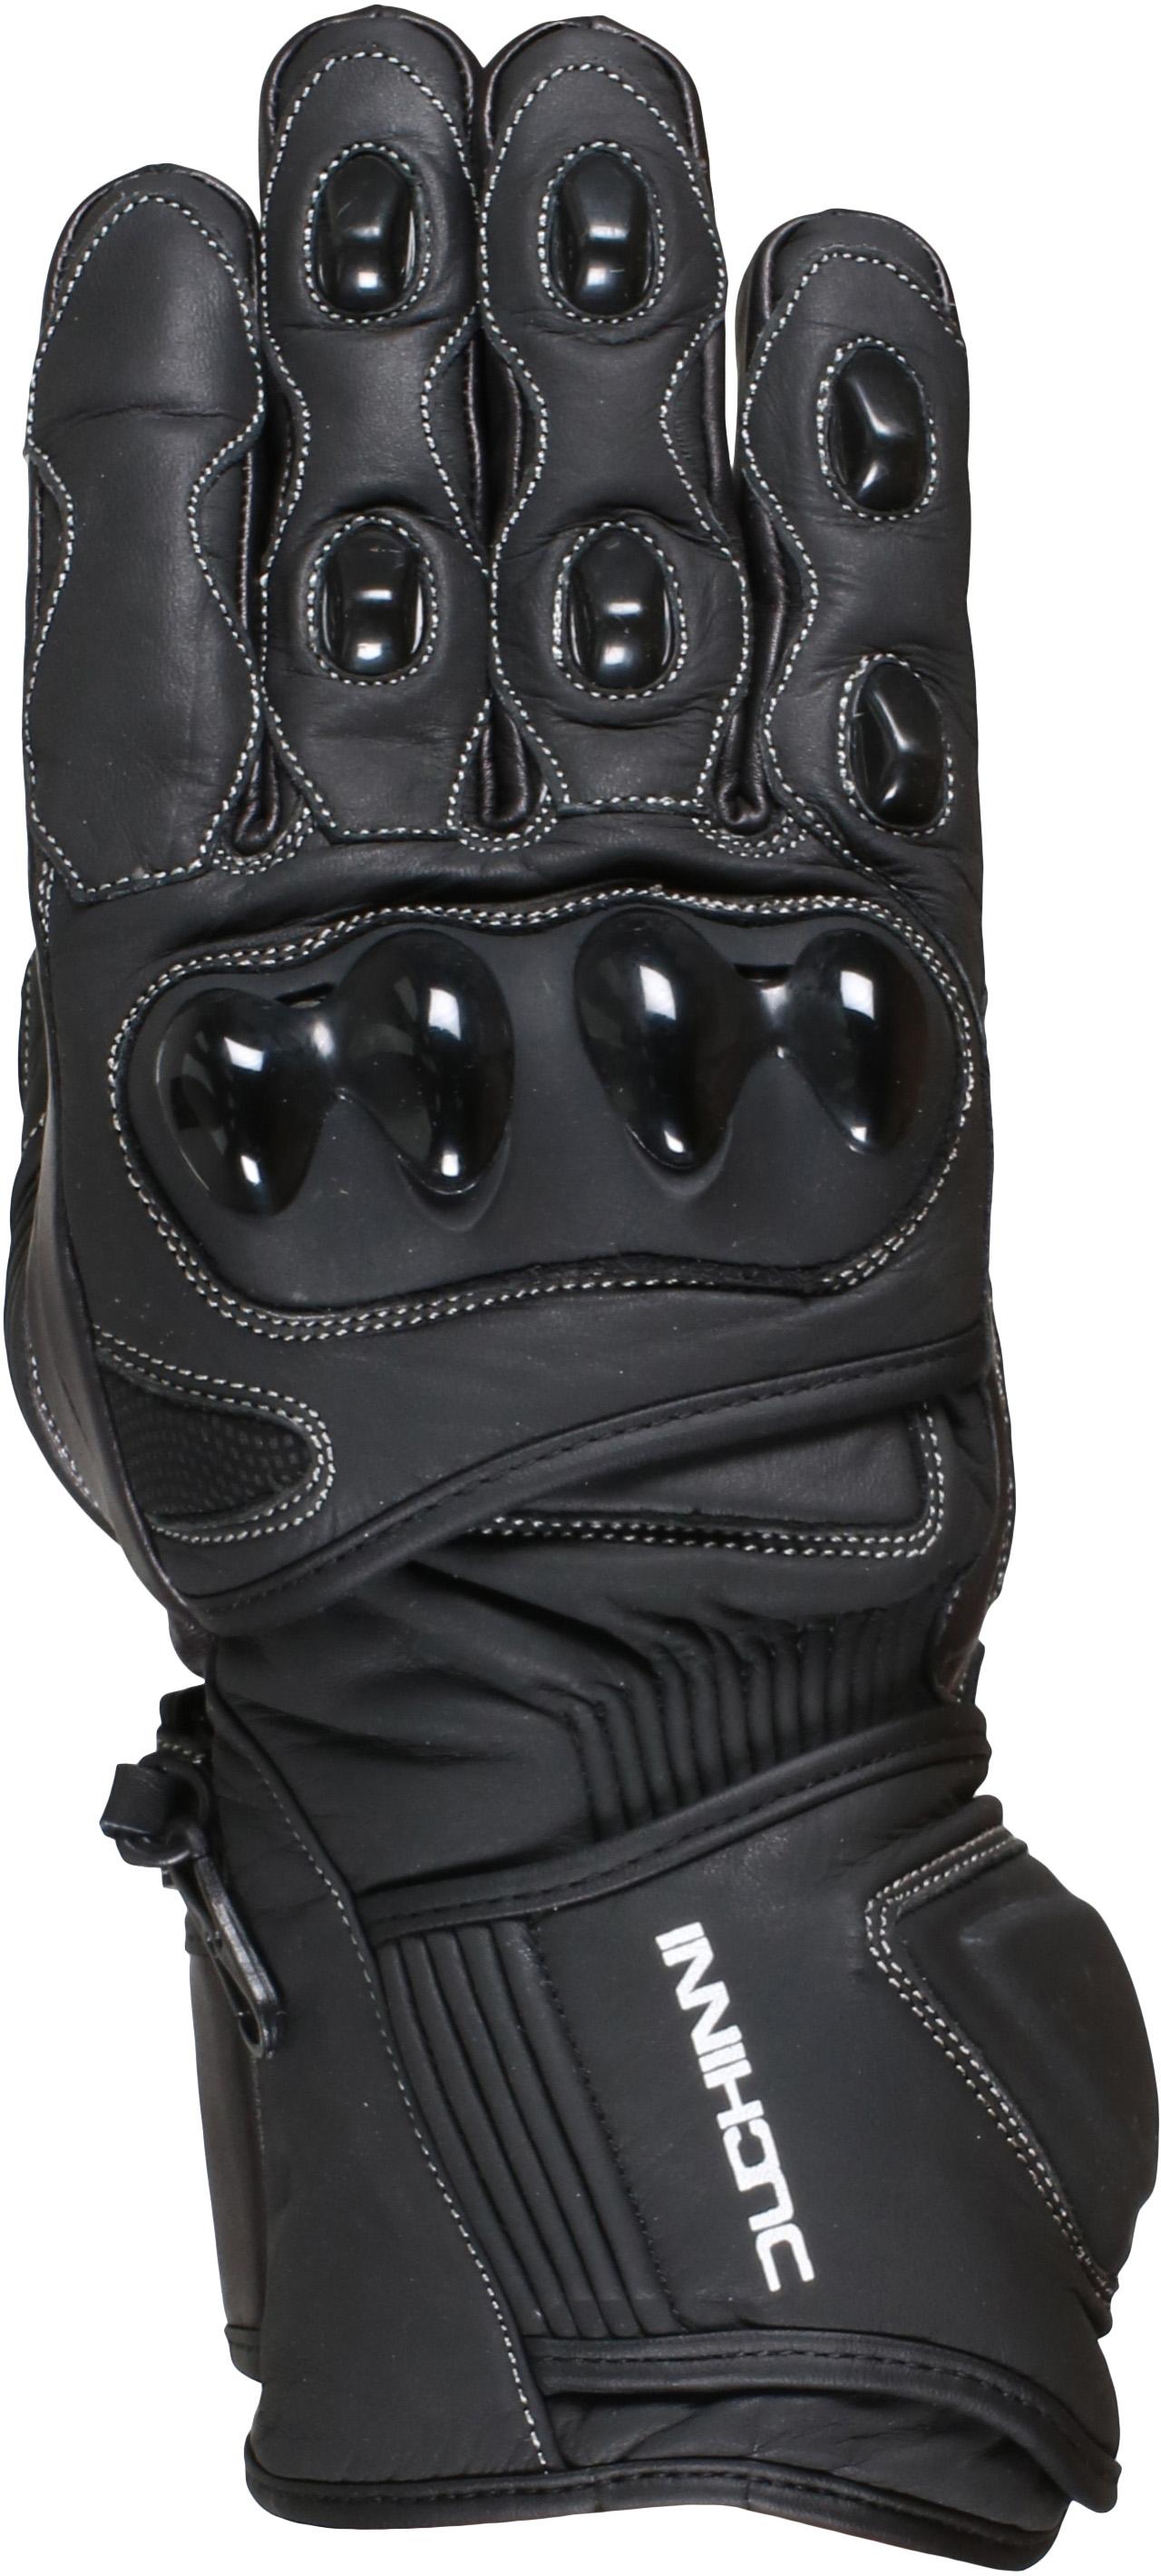 Duchinni Spartan Motorcycle Gloves - Black, 3Xl